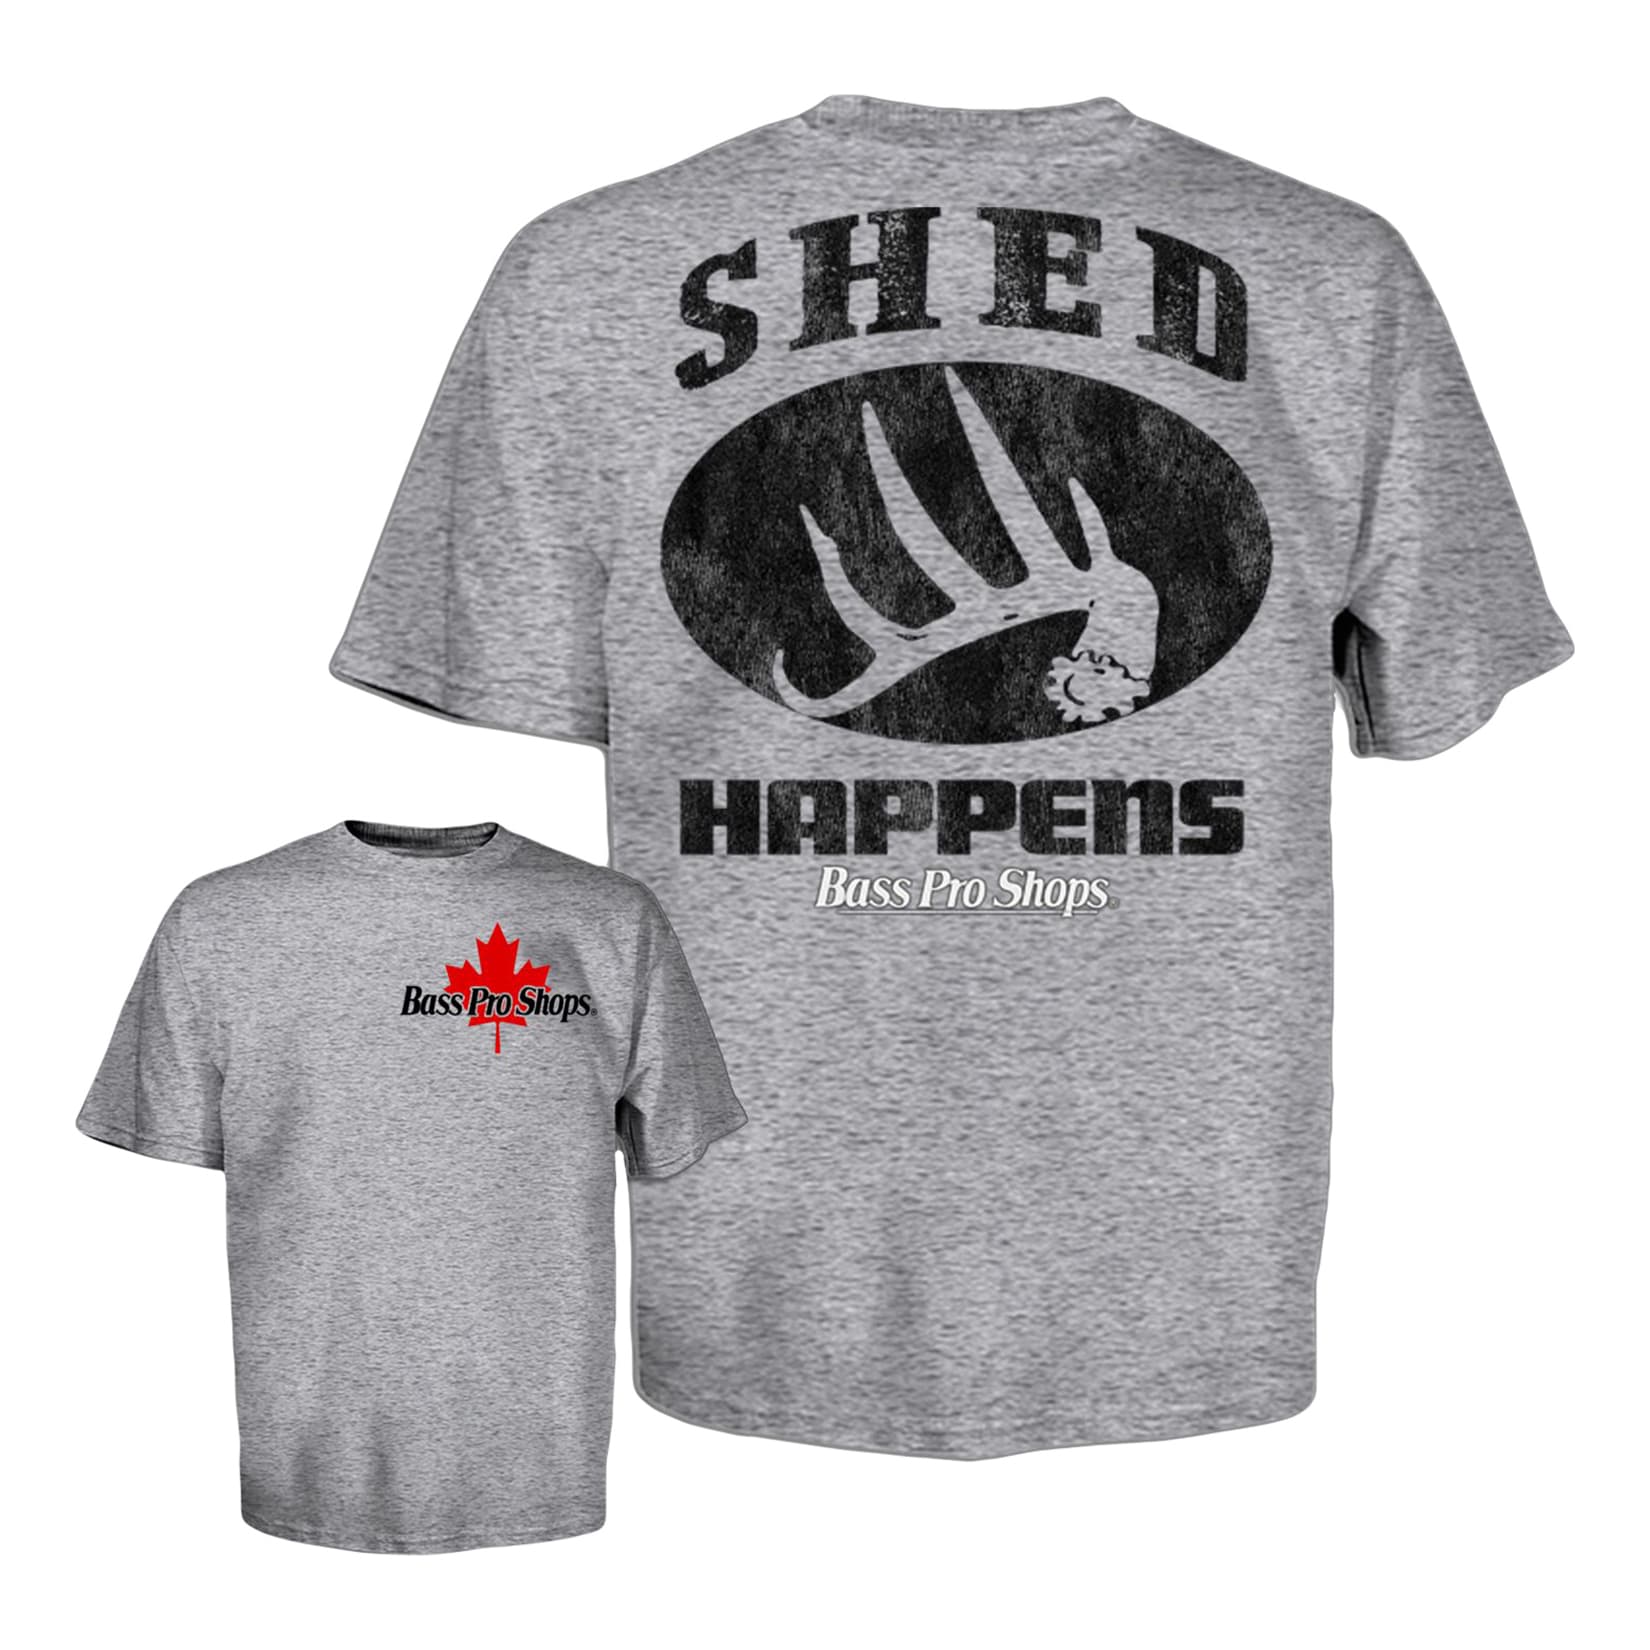 Bass Pro Shops Men’s Shed Happens Logo Short-Sleeve T-Shirt